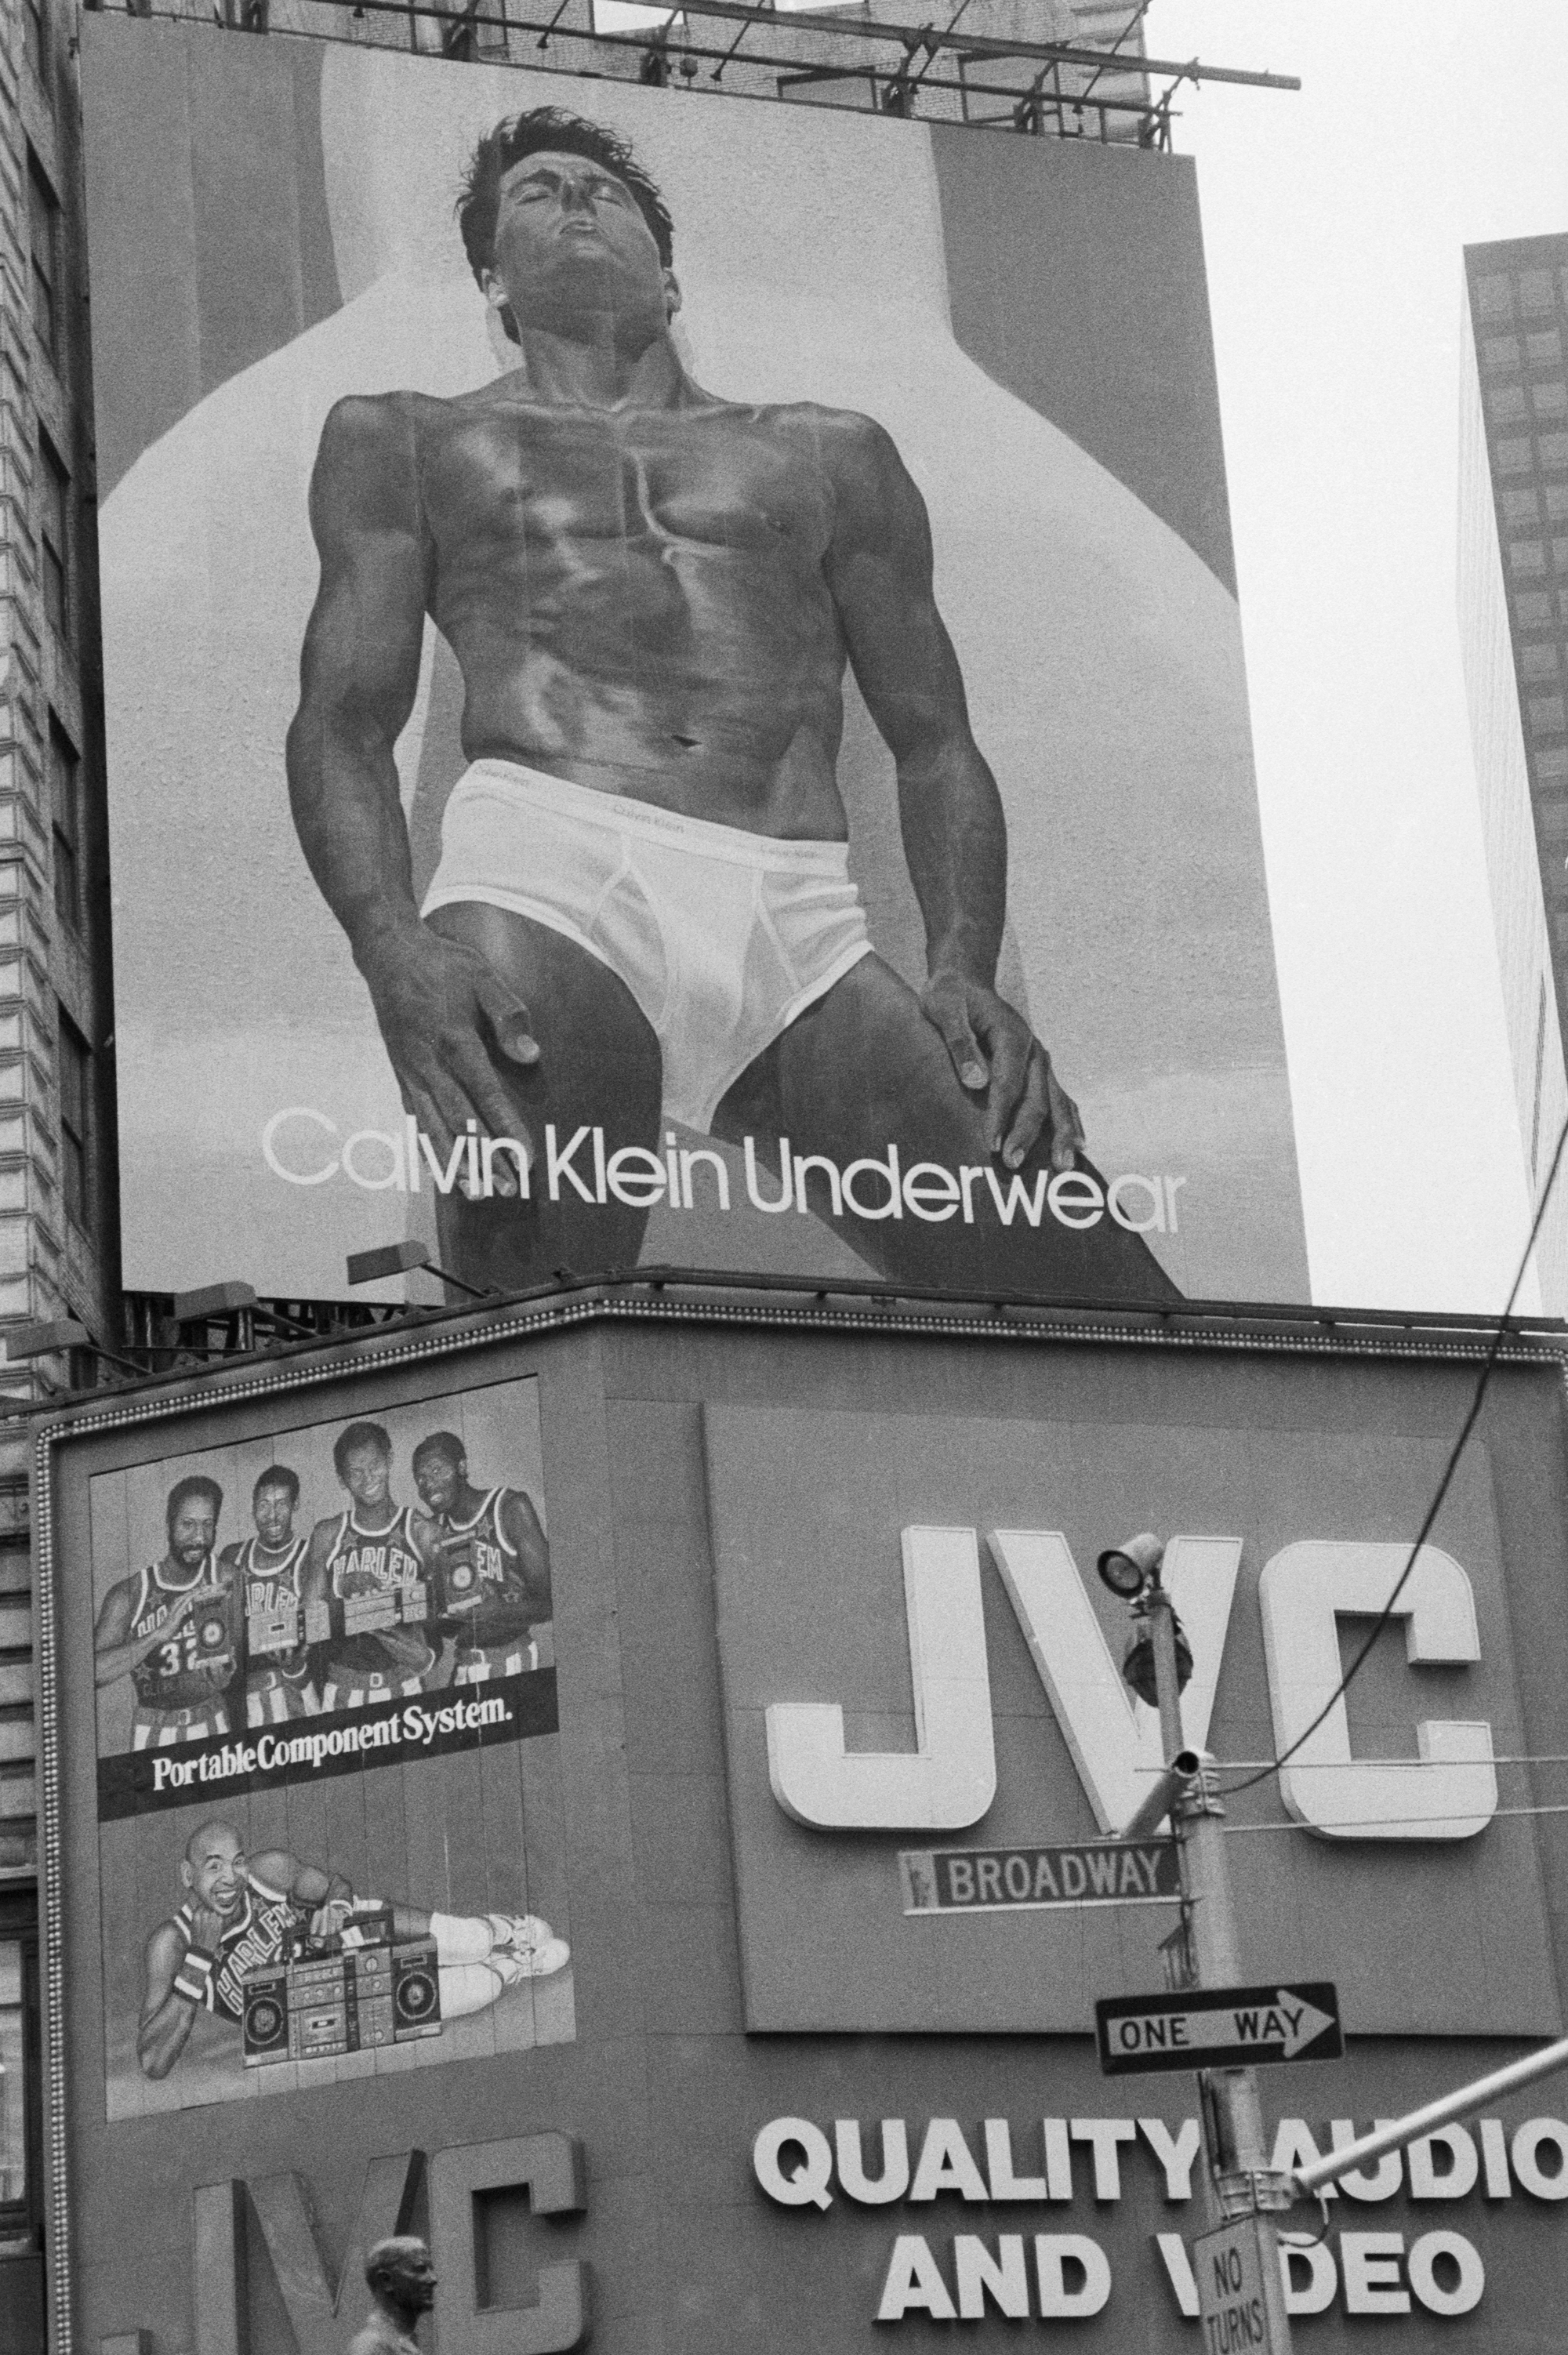 Briefs That Make Women Drool: Objectifying Imagery In Men's Underwear Ads